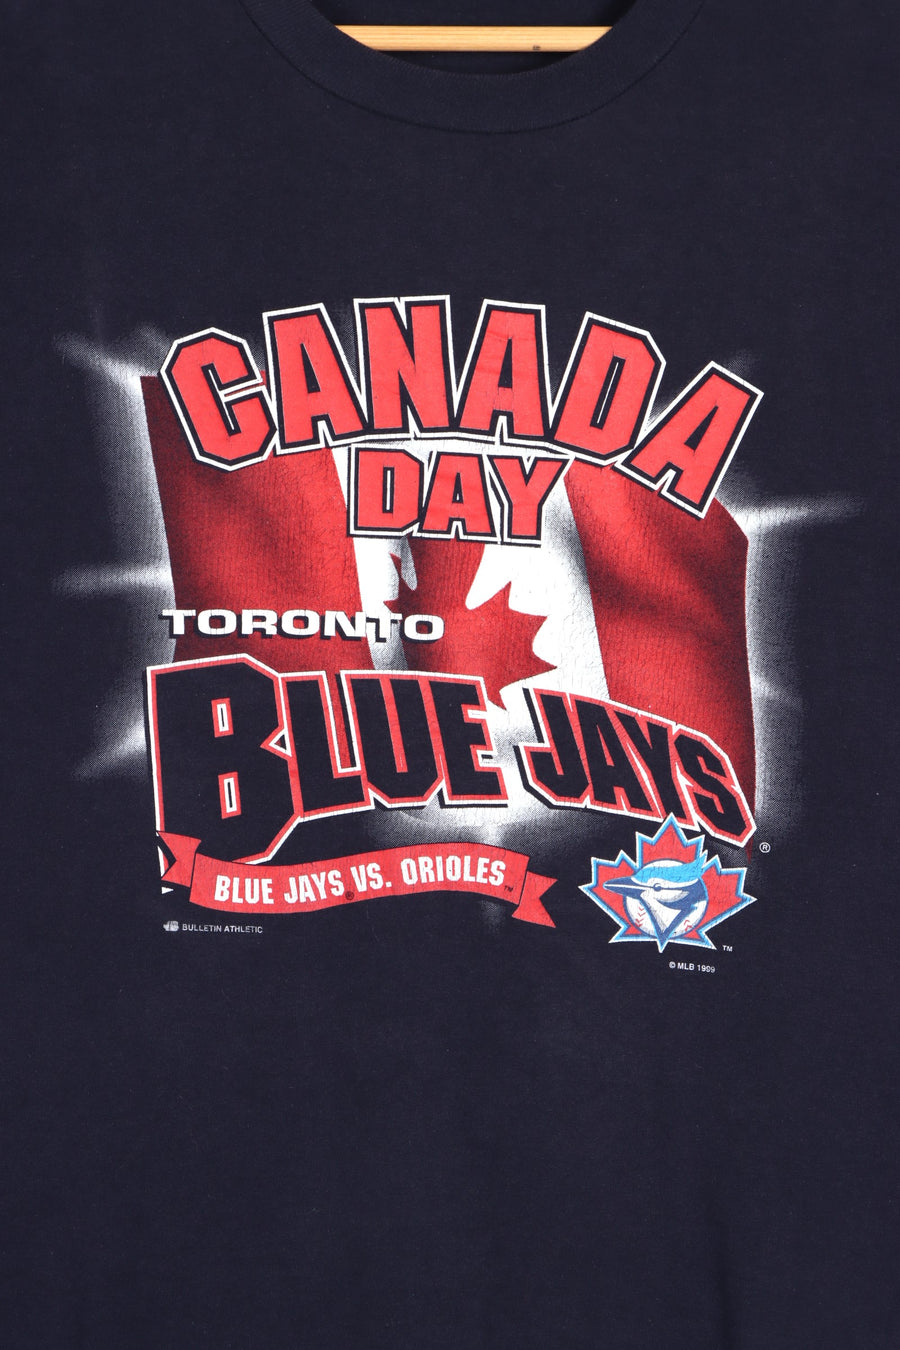 MLB Toronto Blue Jays 1999 Canada Day Single Stitch Tee (XL)